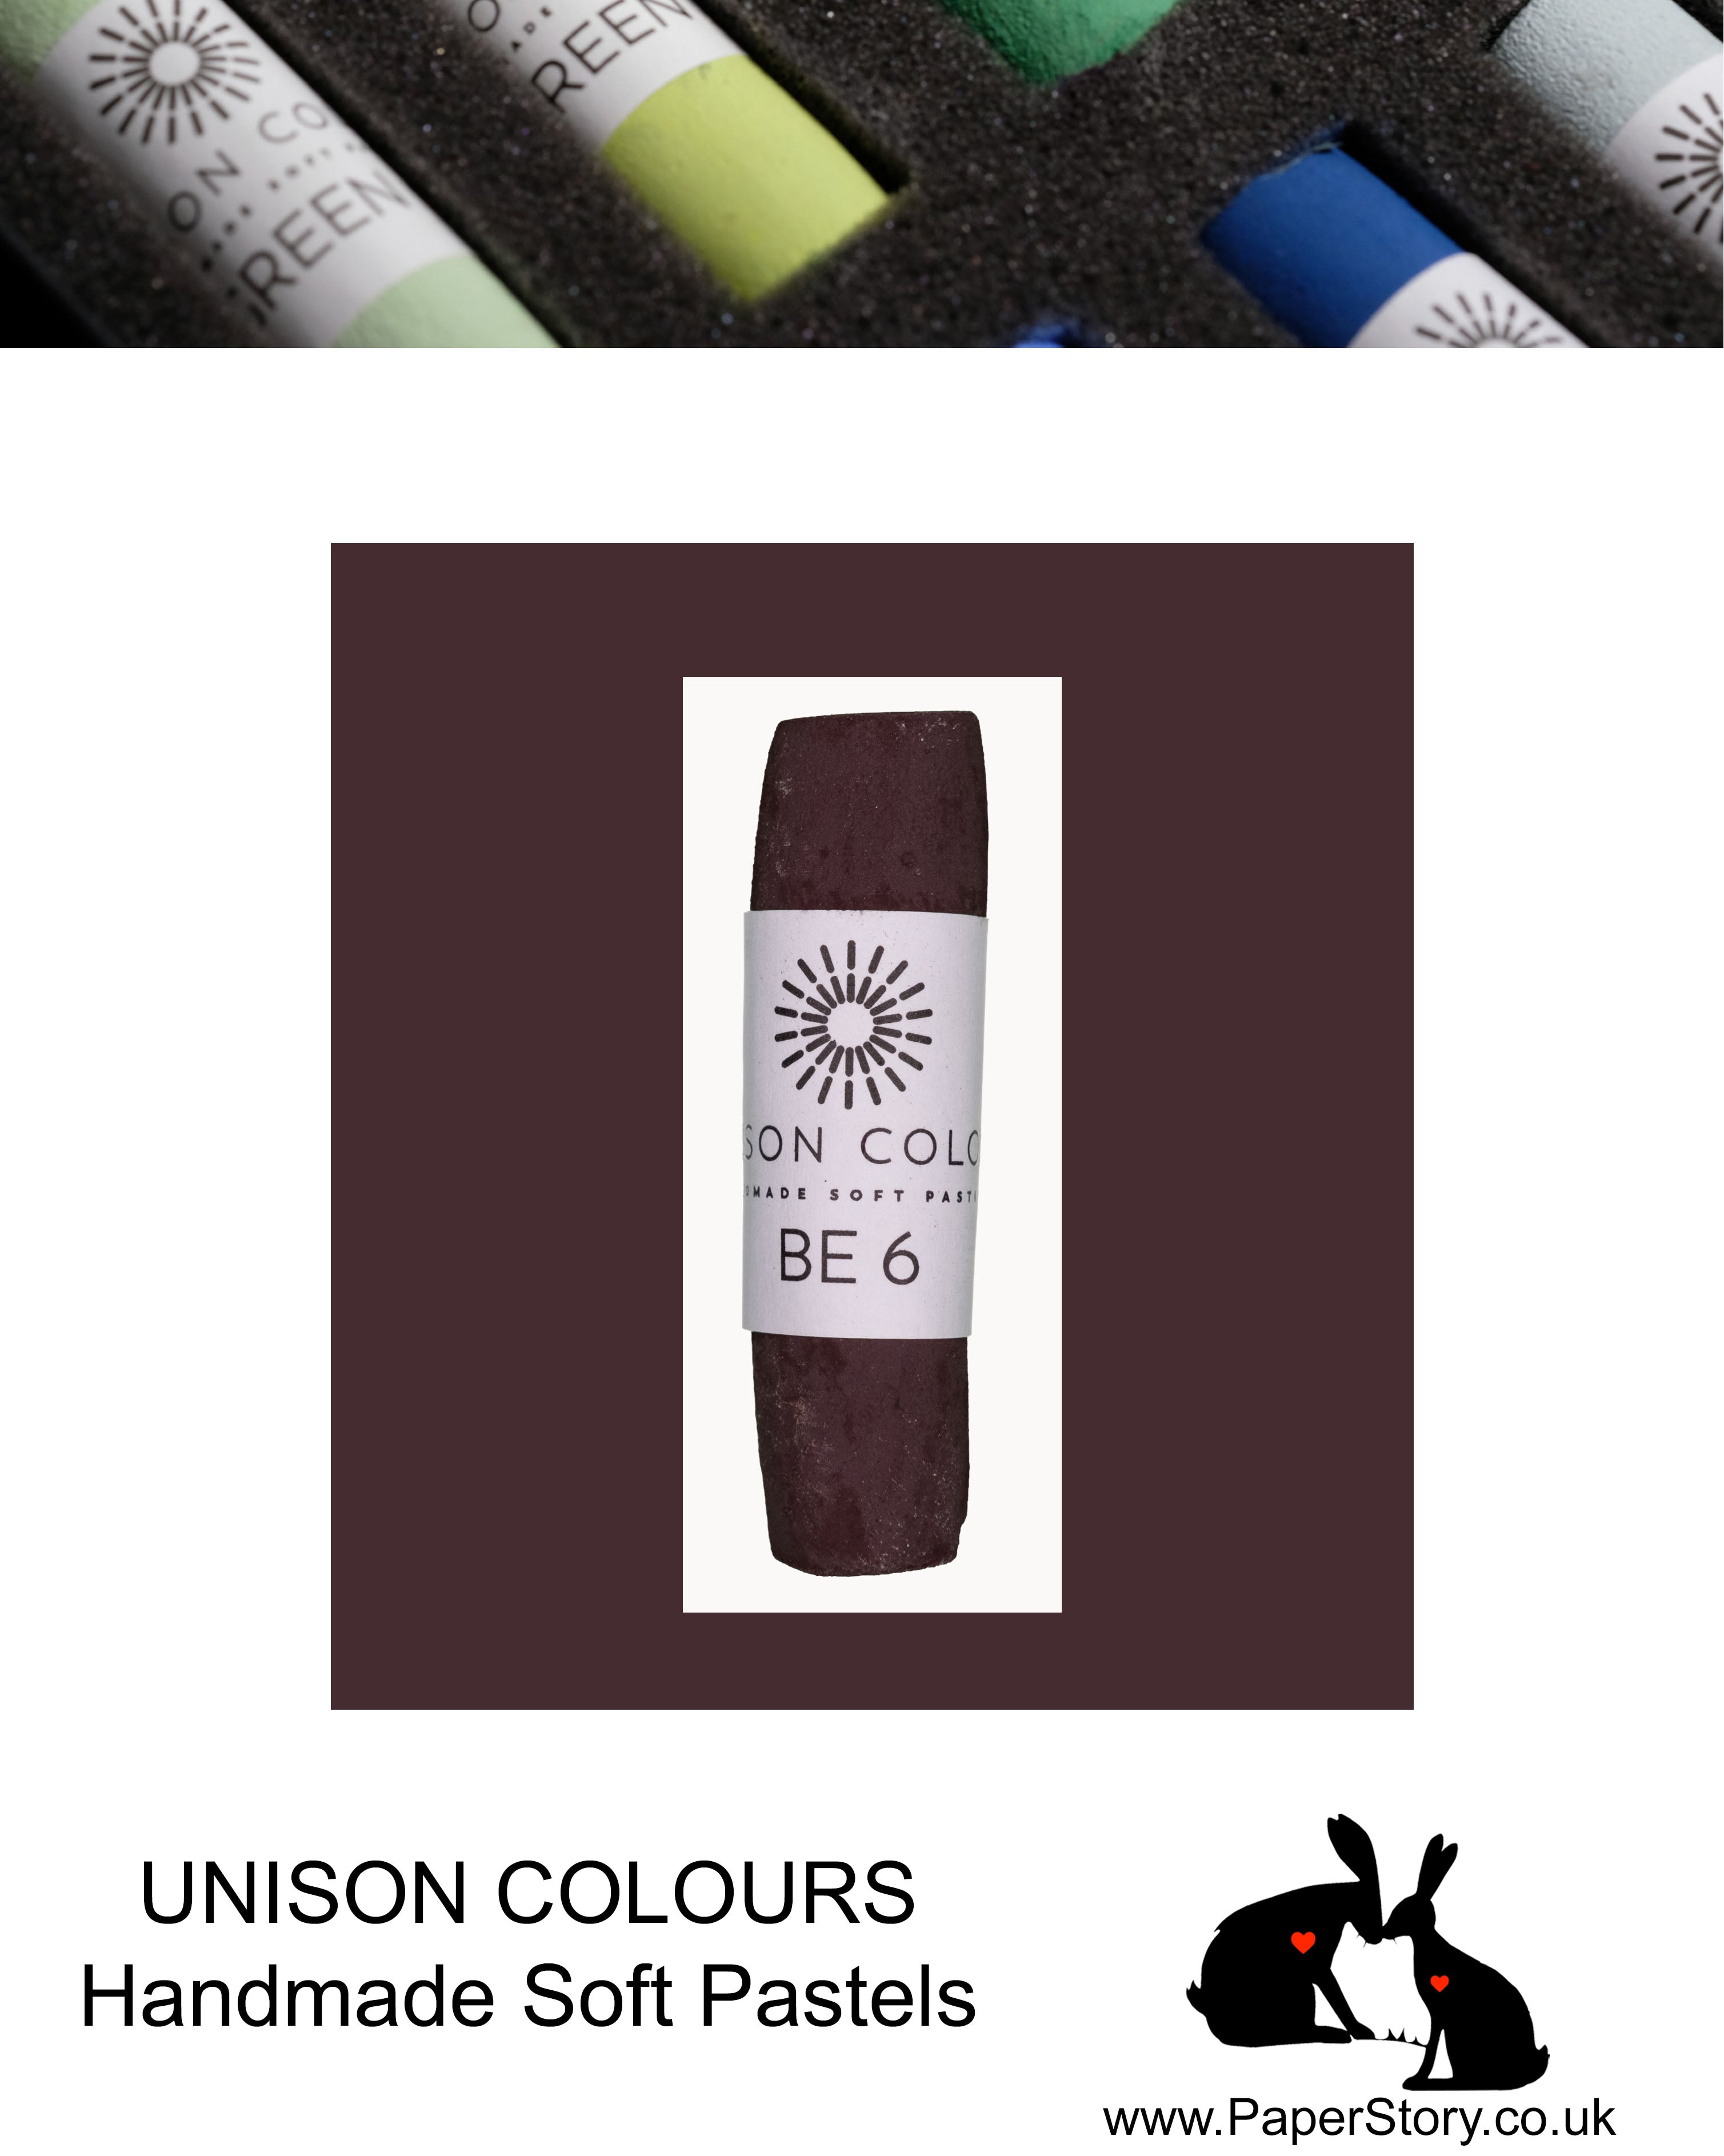 Unison Colour Handmade Soft Pastels Brown Earth 6 - Size Regular